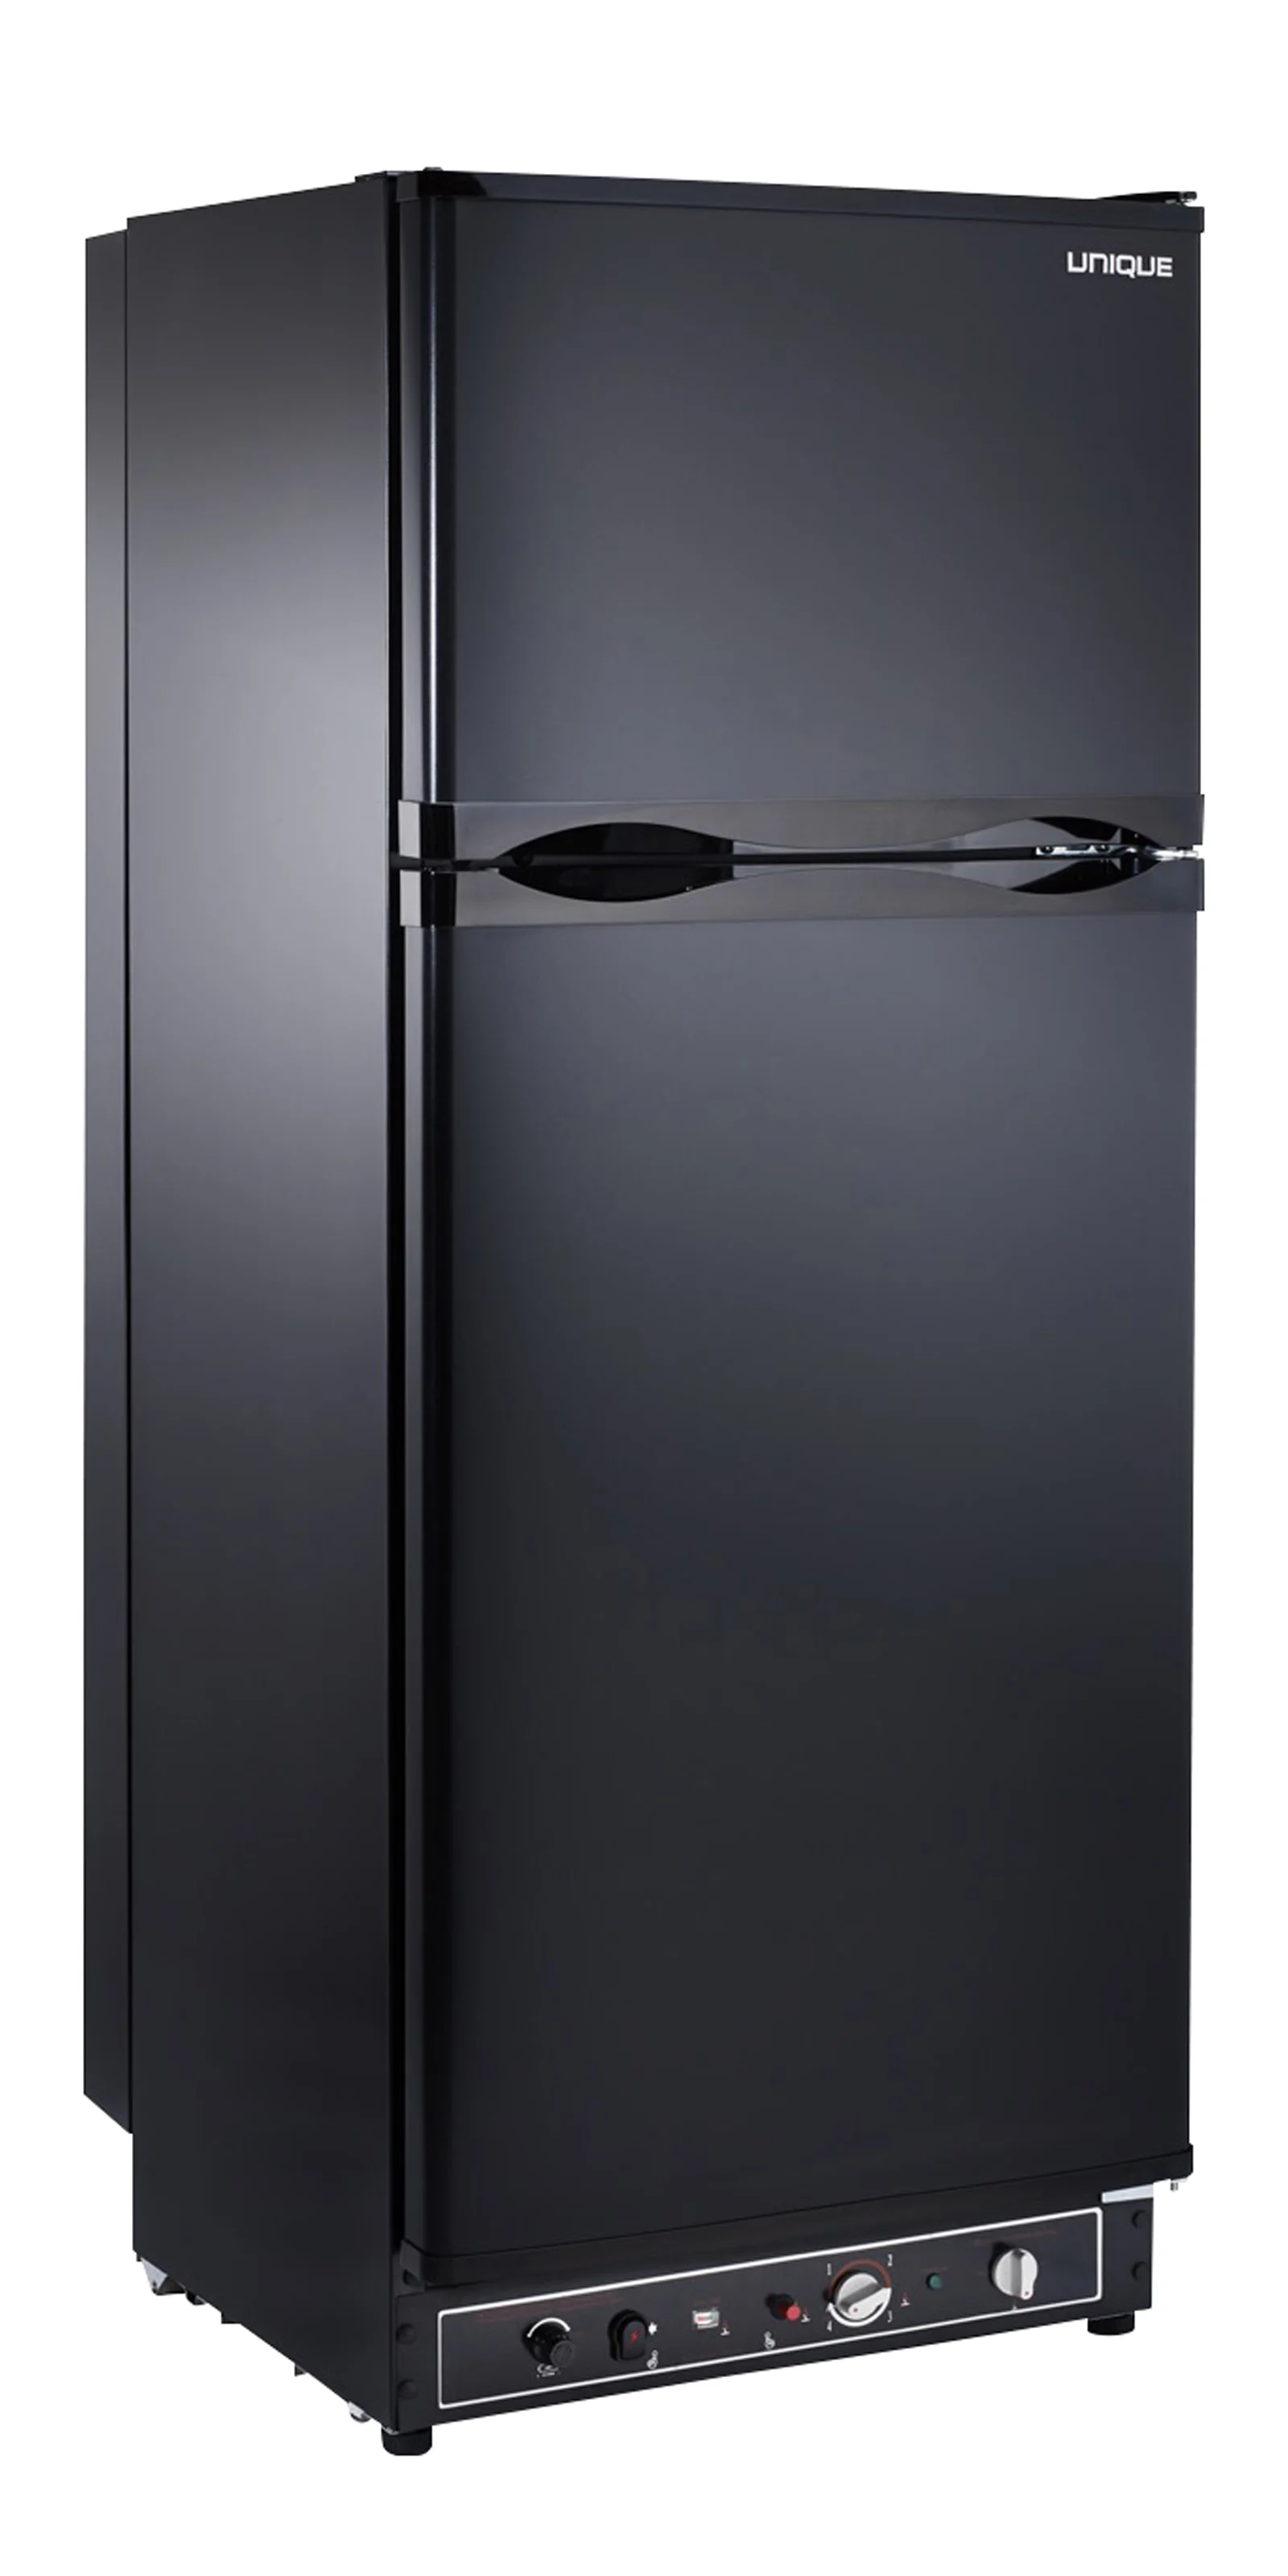 Propane refrigerators